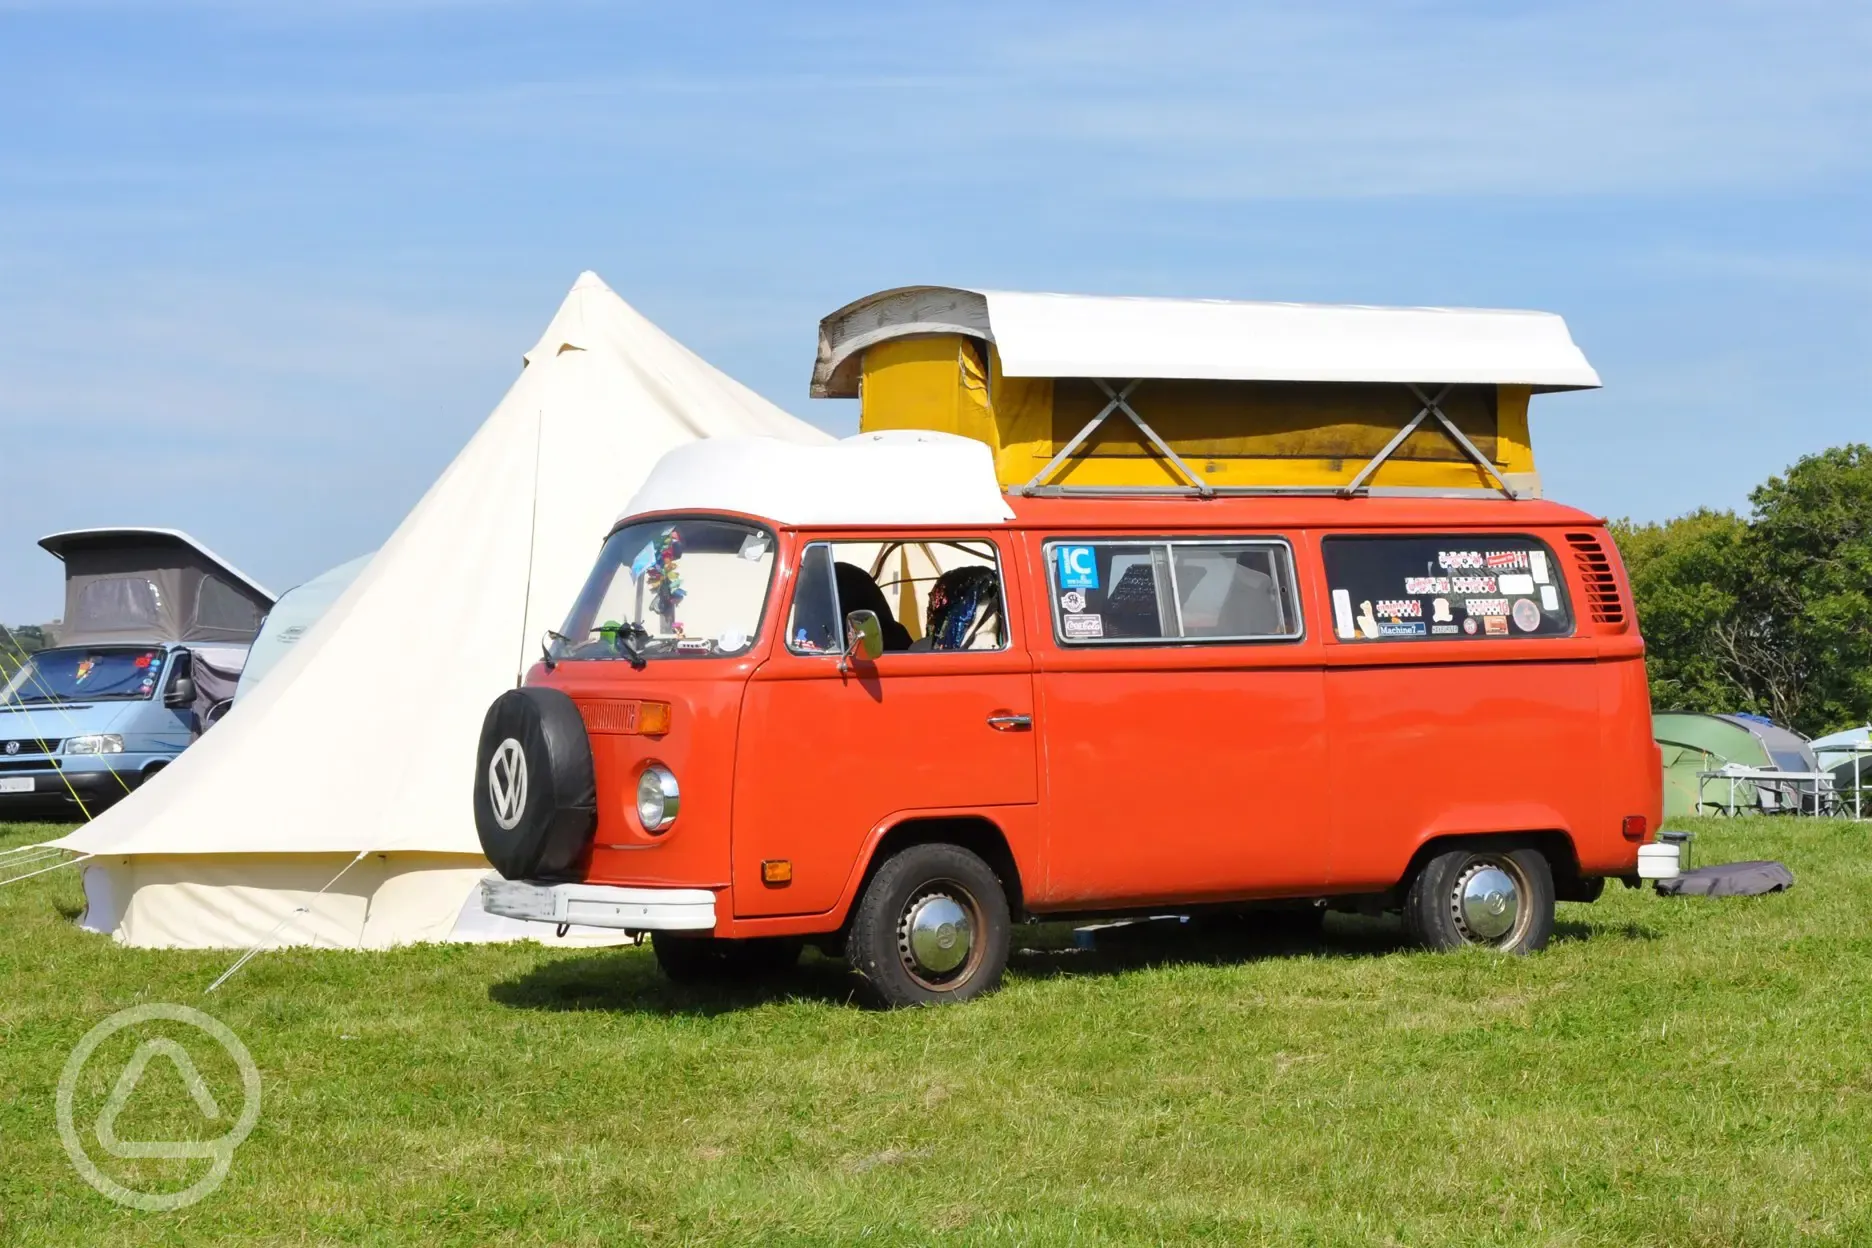 Campervans allowed at Bedgebury Camping